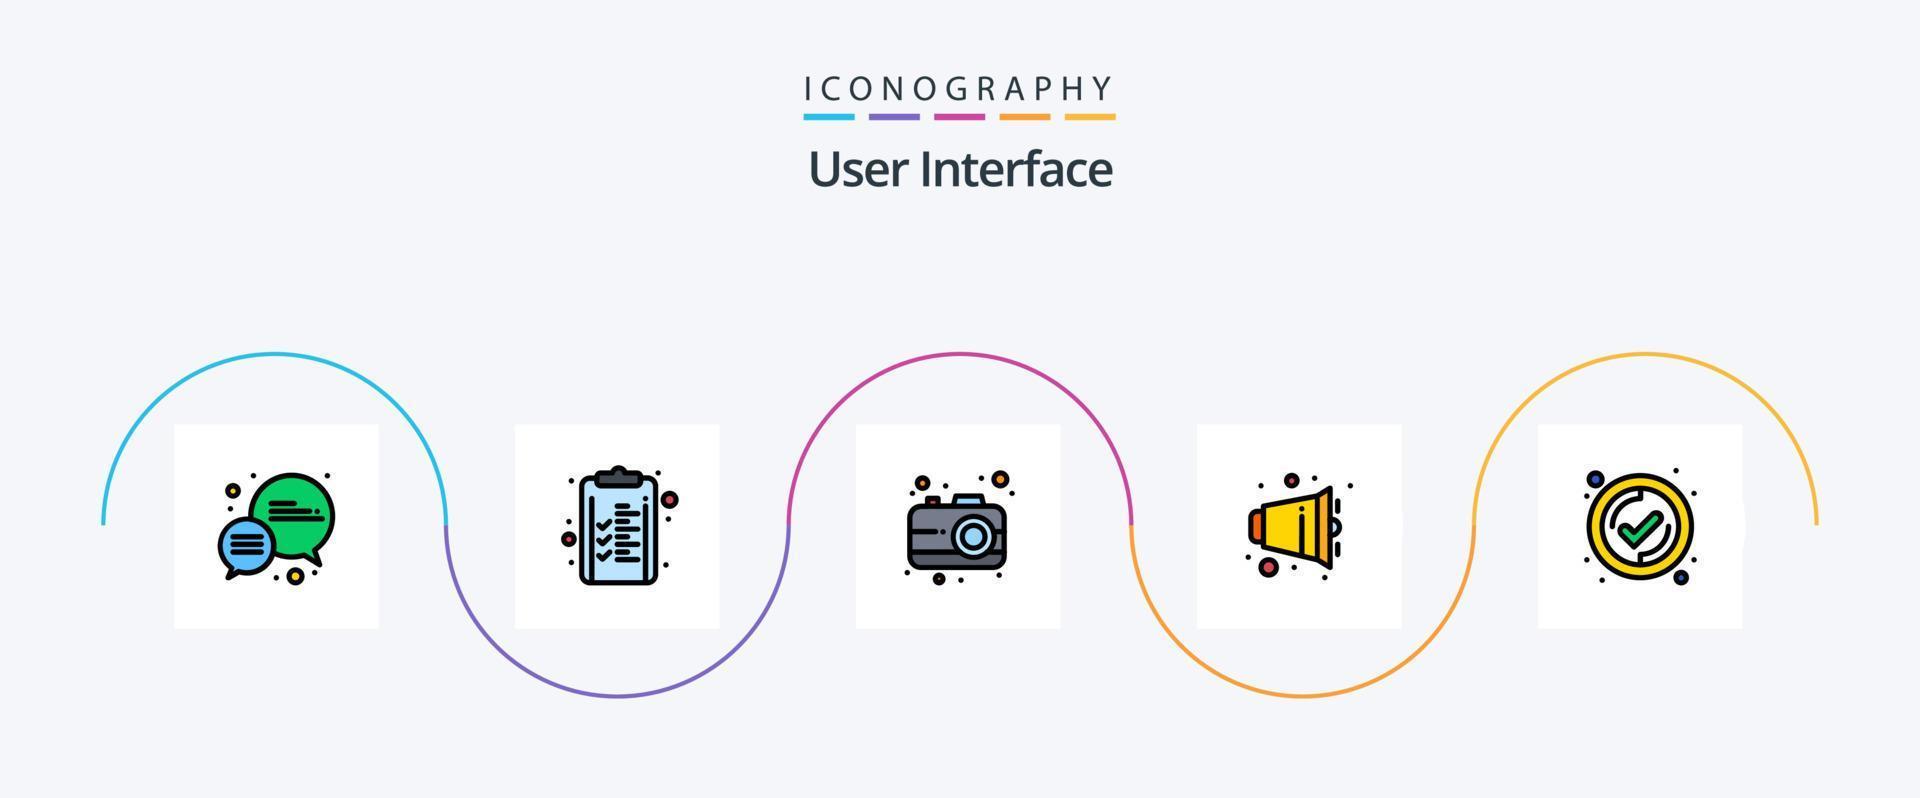 paquete de iconos de 5 planos llenos de línea de interfaz de usuario que incluye . garrapata. interfaz. interfaz. volumen vector